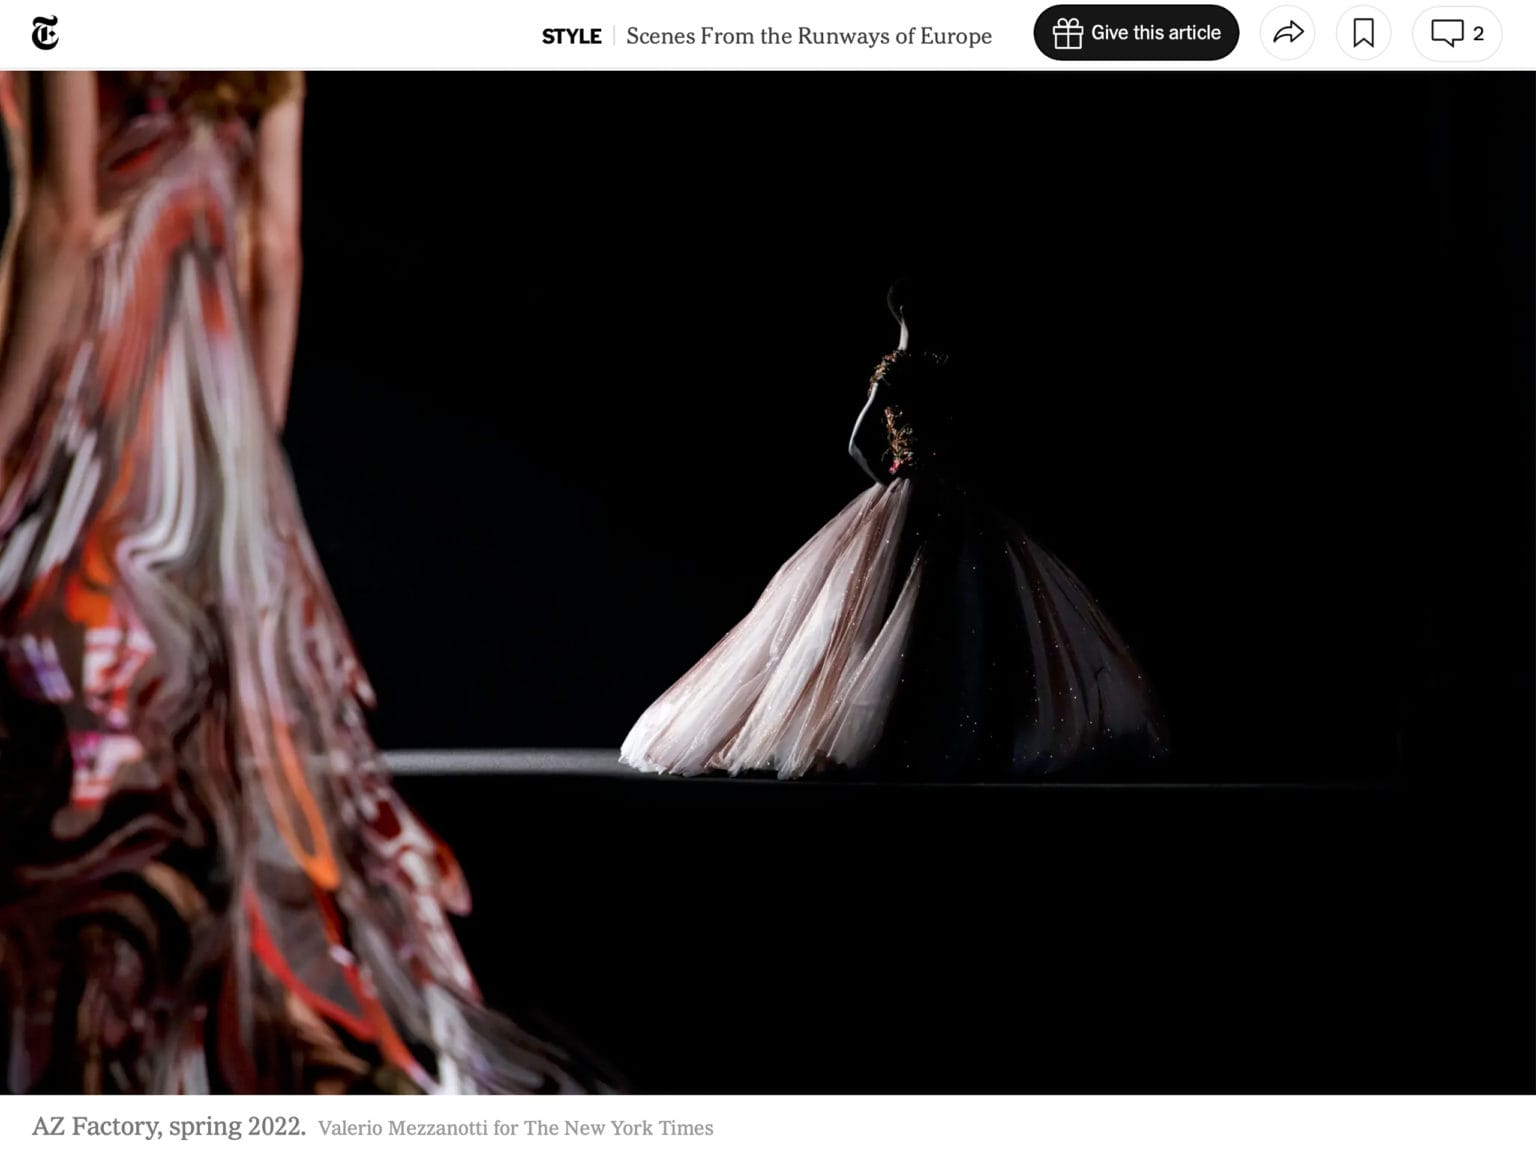 AZ Factory Fashion Show, Photo by Valerio Mezzanotti for The New York Times